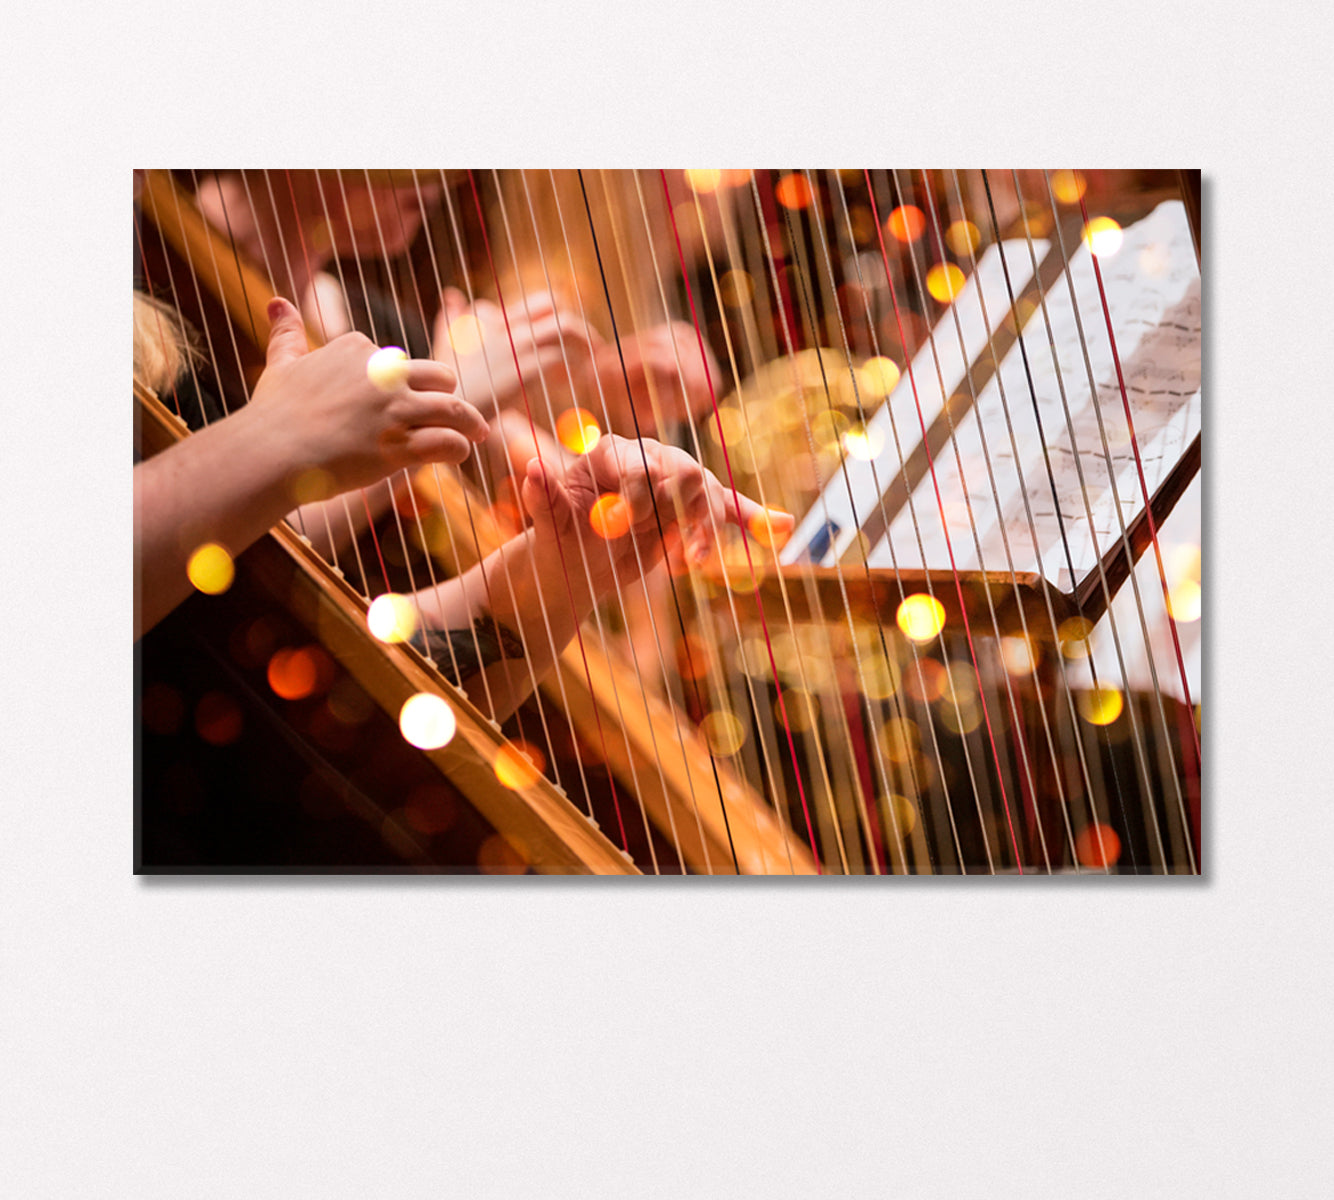 Playing the Harp Close Up Canvas Print-Canvas Print-CetArt-1 Panel-24x16 inches-CetArt